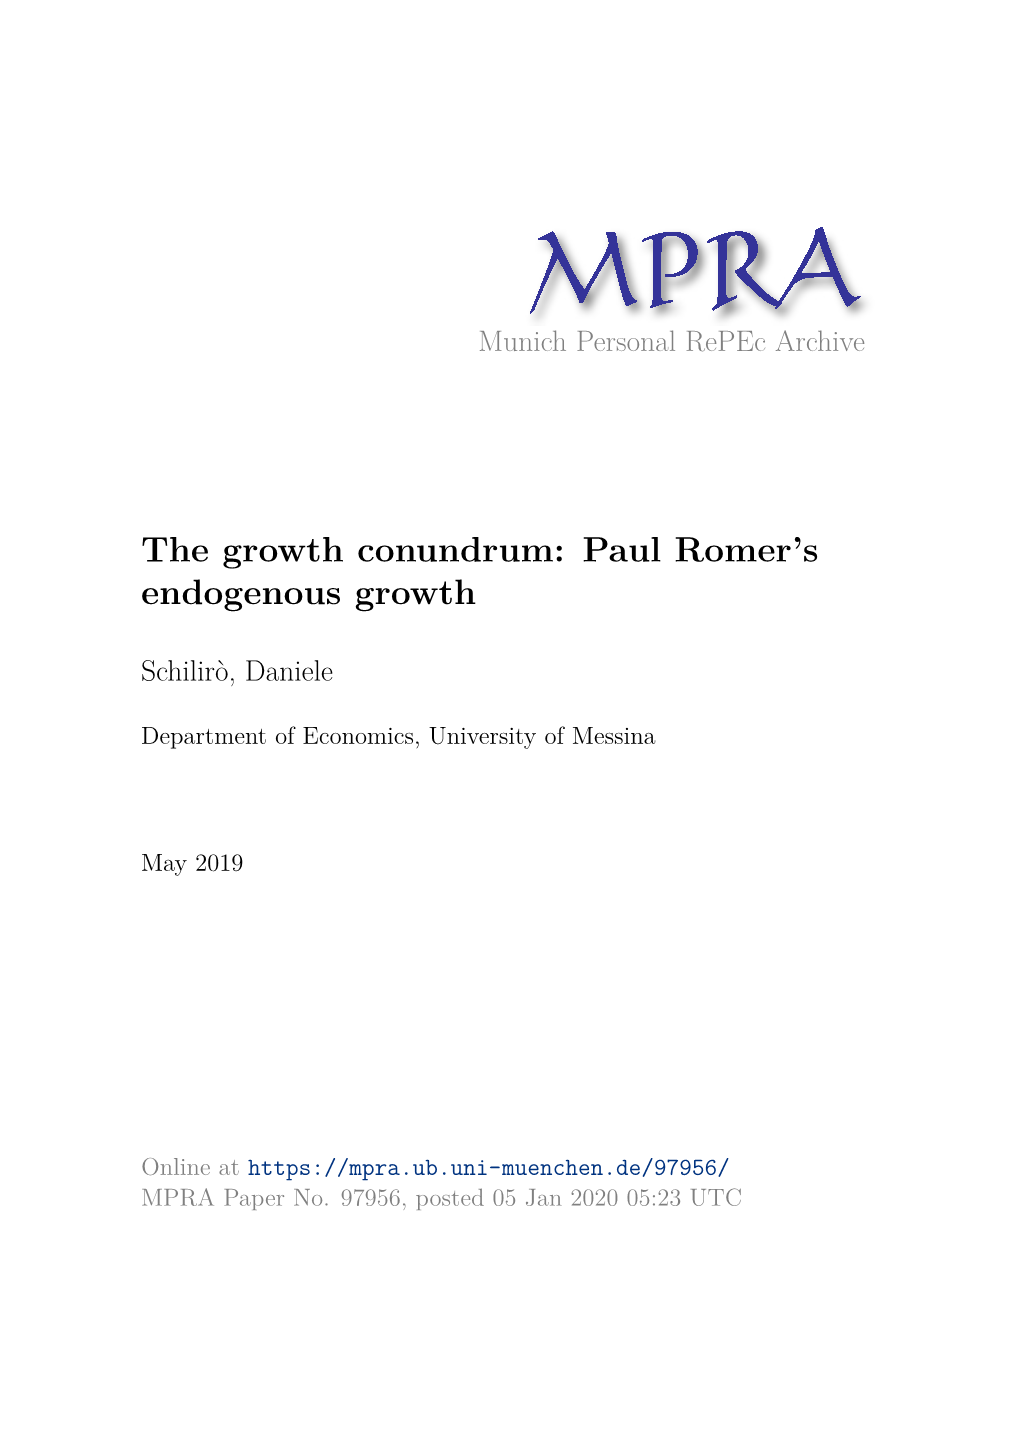 Paul Romer's Endogenous Growth